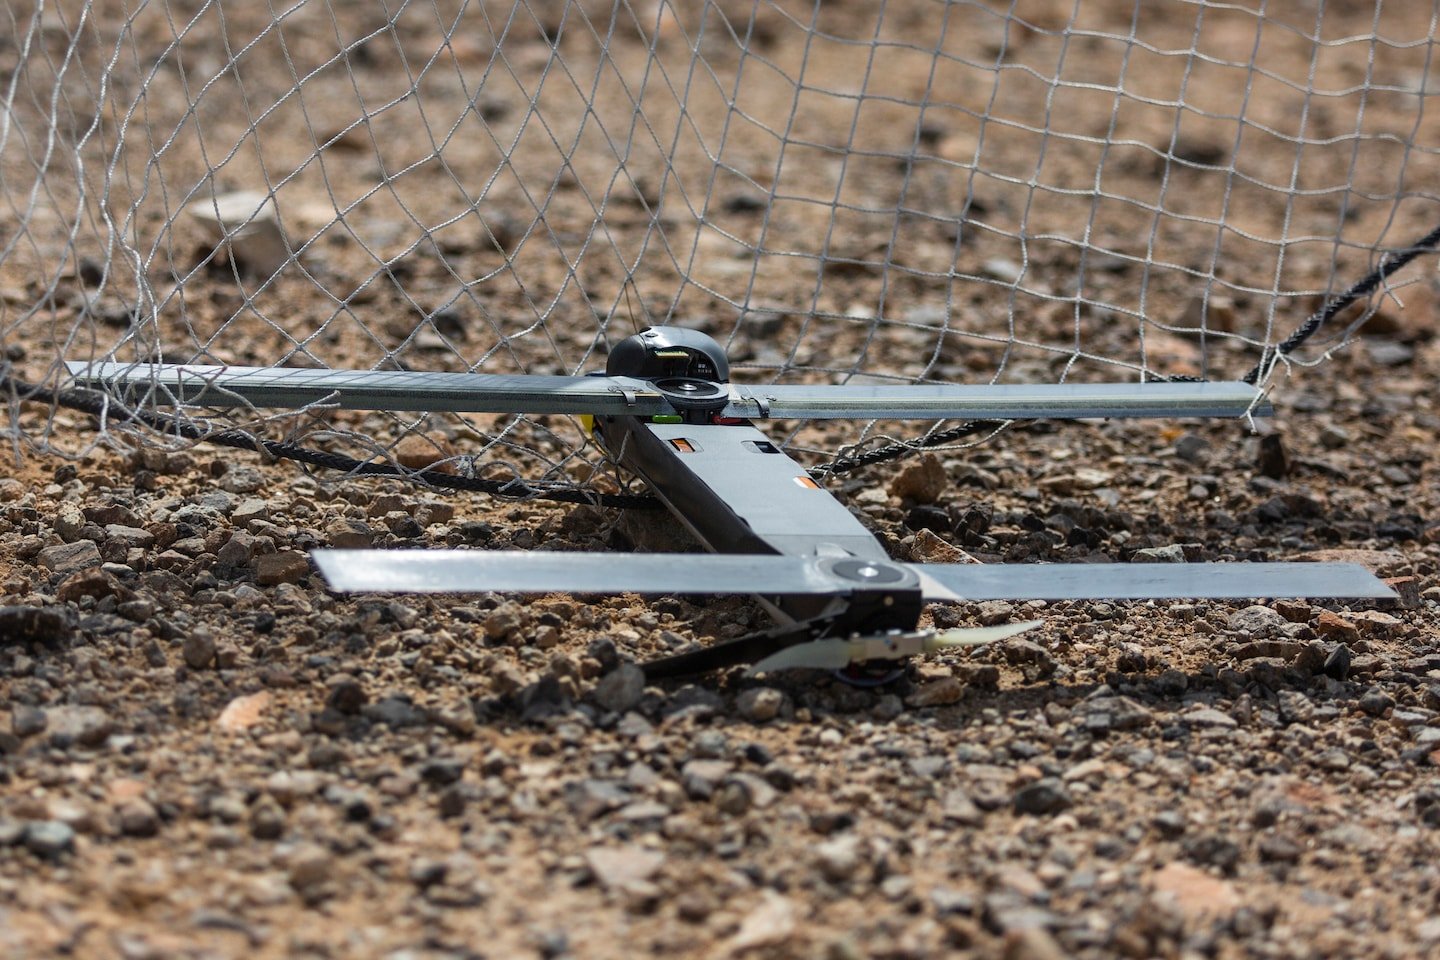 What are Switchblade drones, the kamikaze ‘killer’ drones Biden is sending to Ukraine?